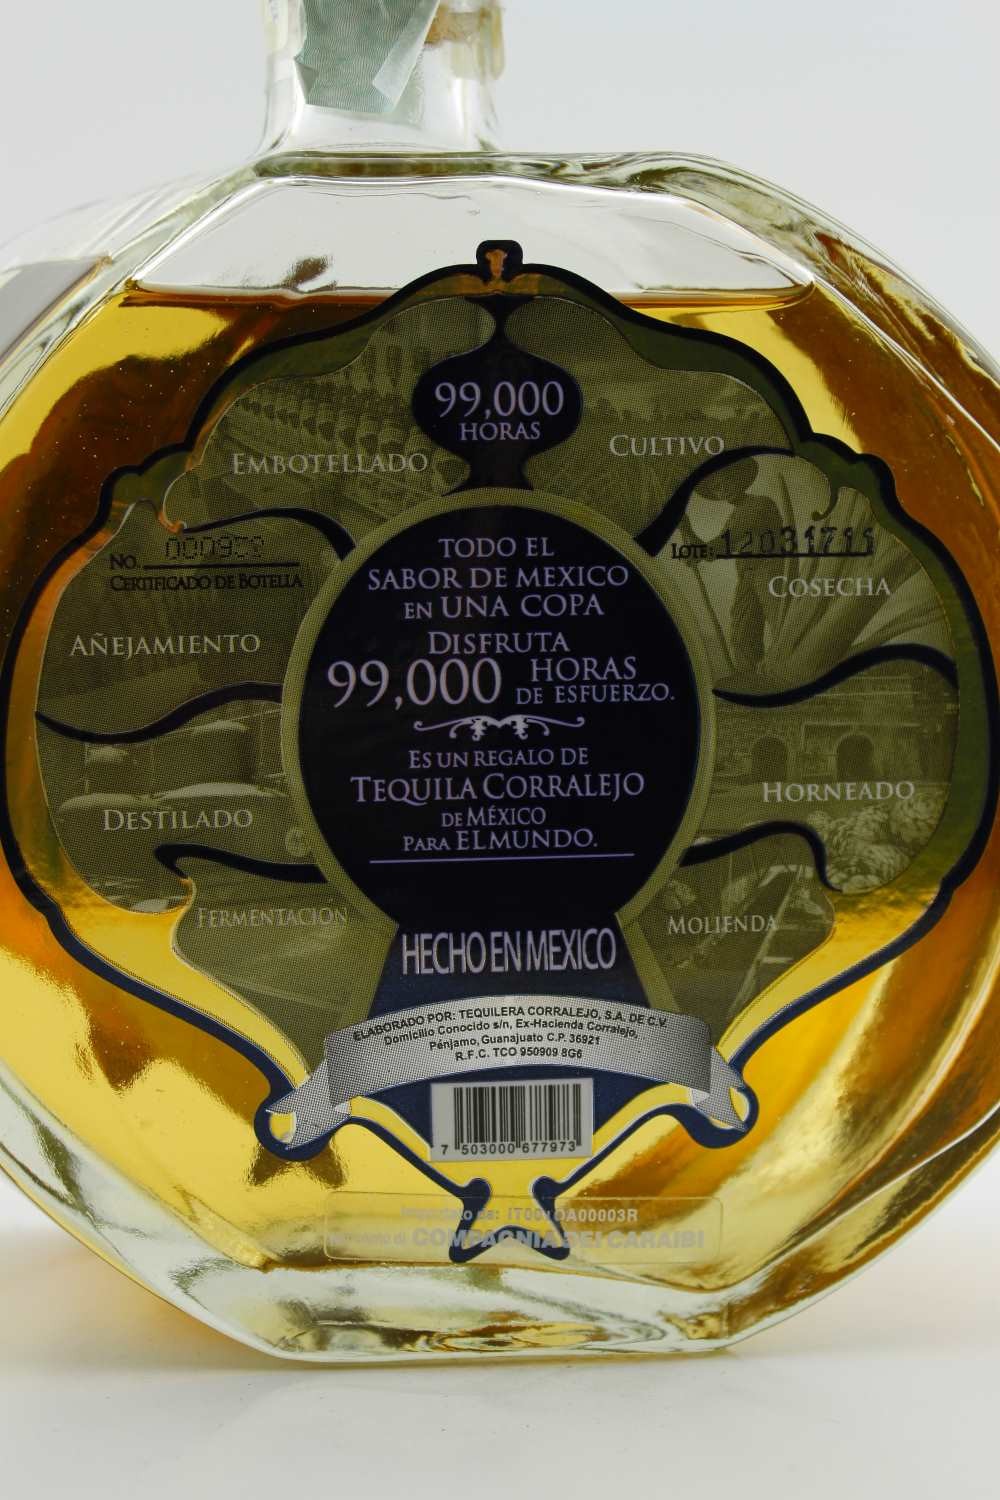 Corralejo Tequila 99.000 Horas Anejo 38% vol. Destillate Ausland